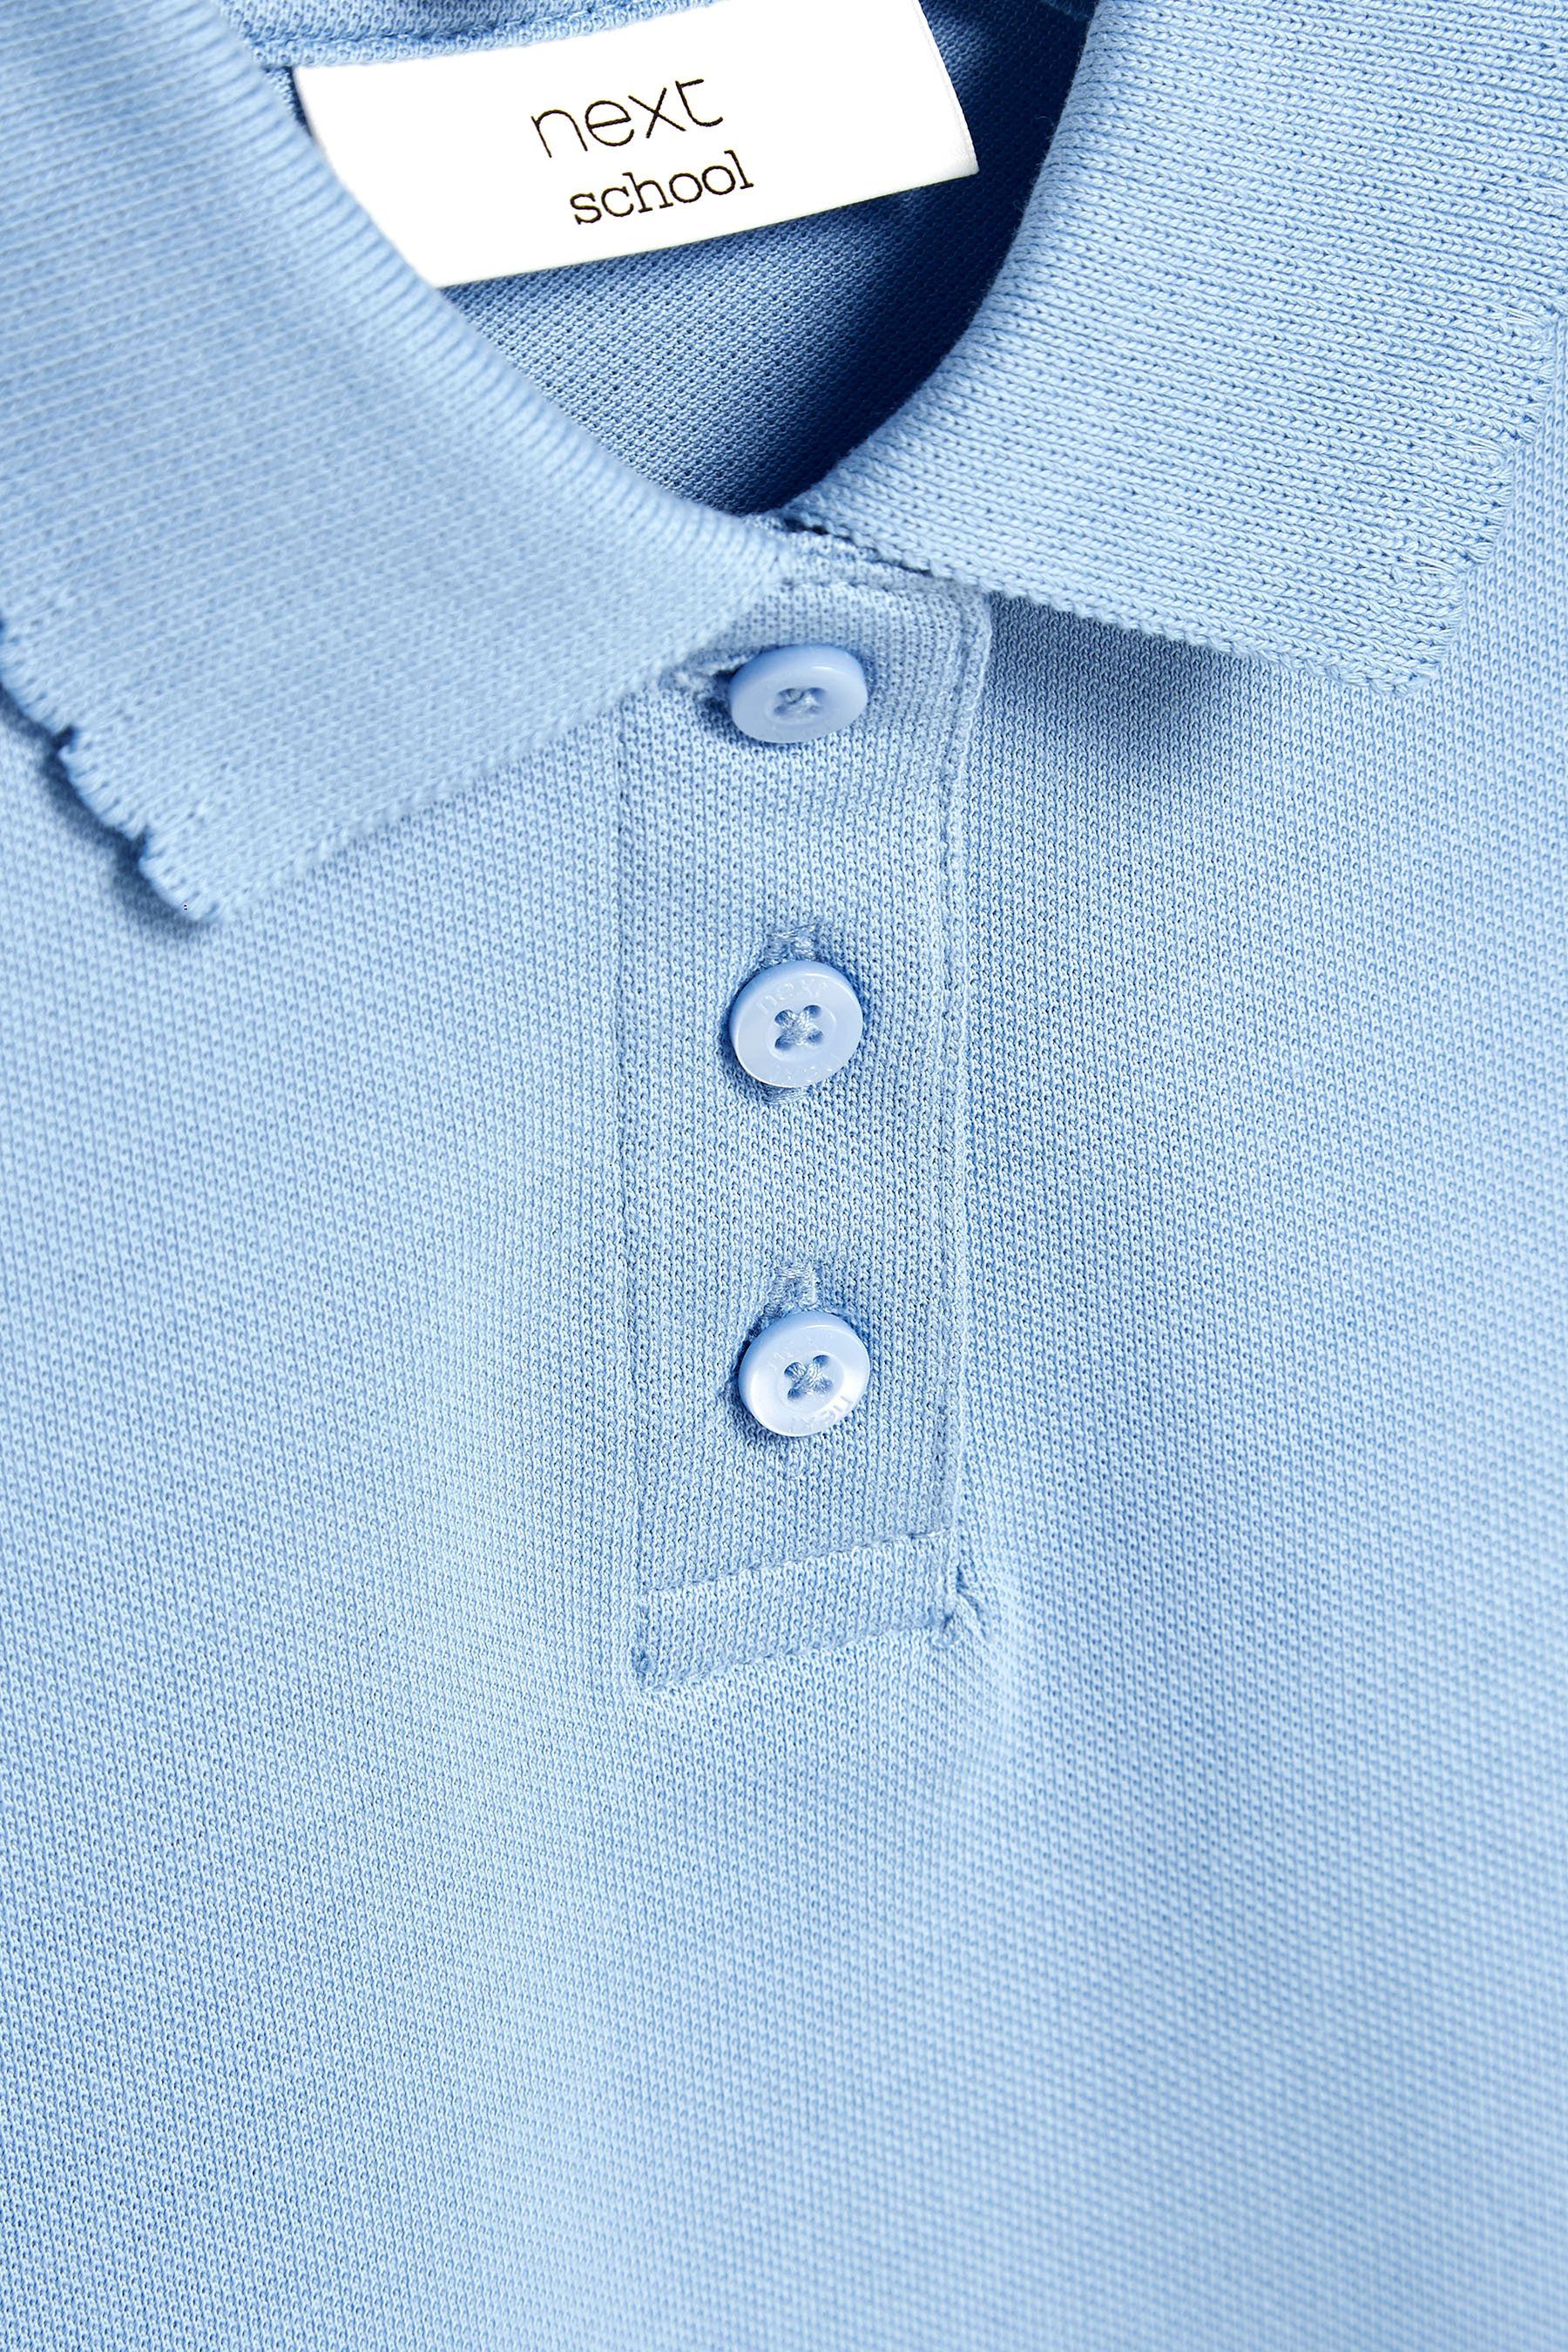 Polohemden Kurzärmelige im Next Poloshirt Baumwolle Blue aus 2er-Pack (2-tlg)